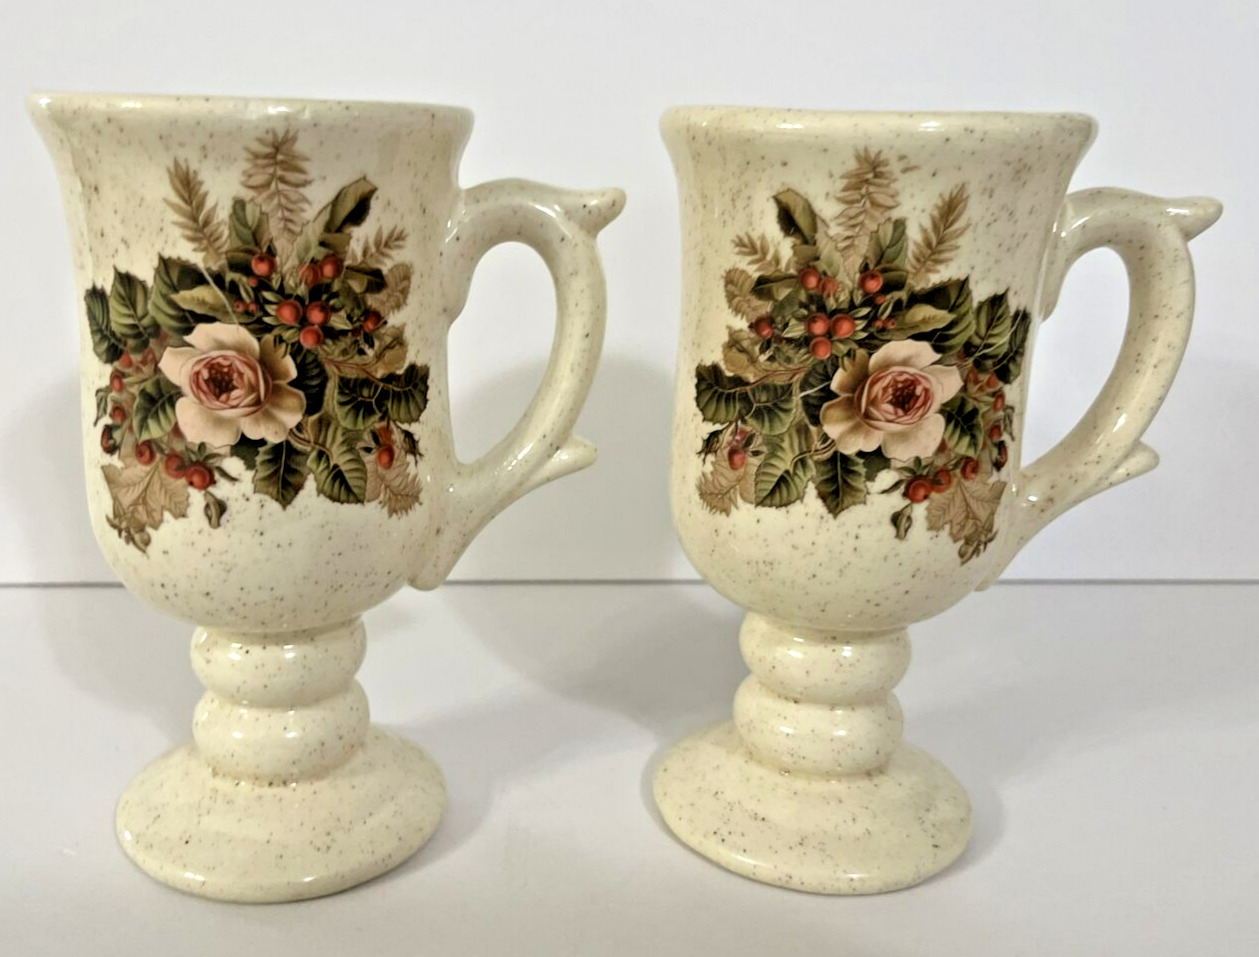 Blooming Beauties Two Ceramic Floral Mugs - Set of 2